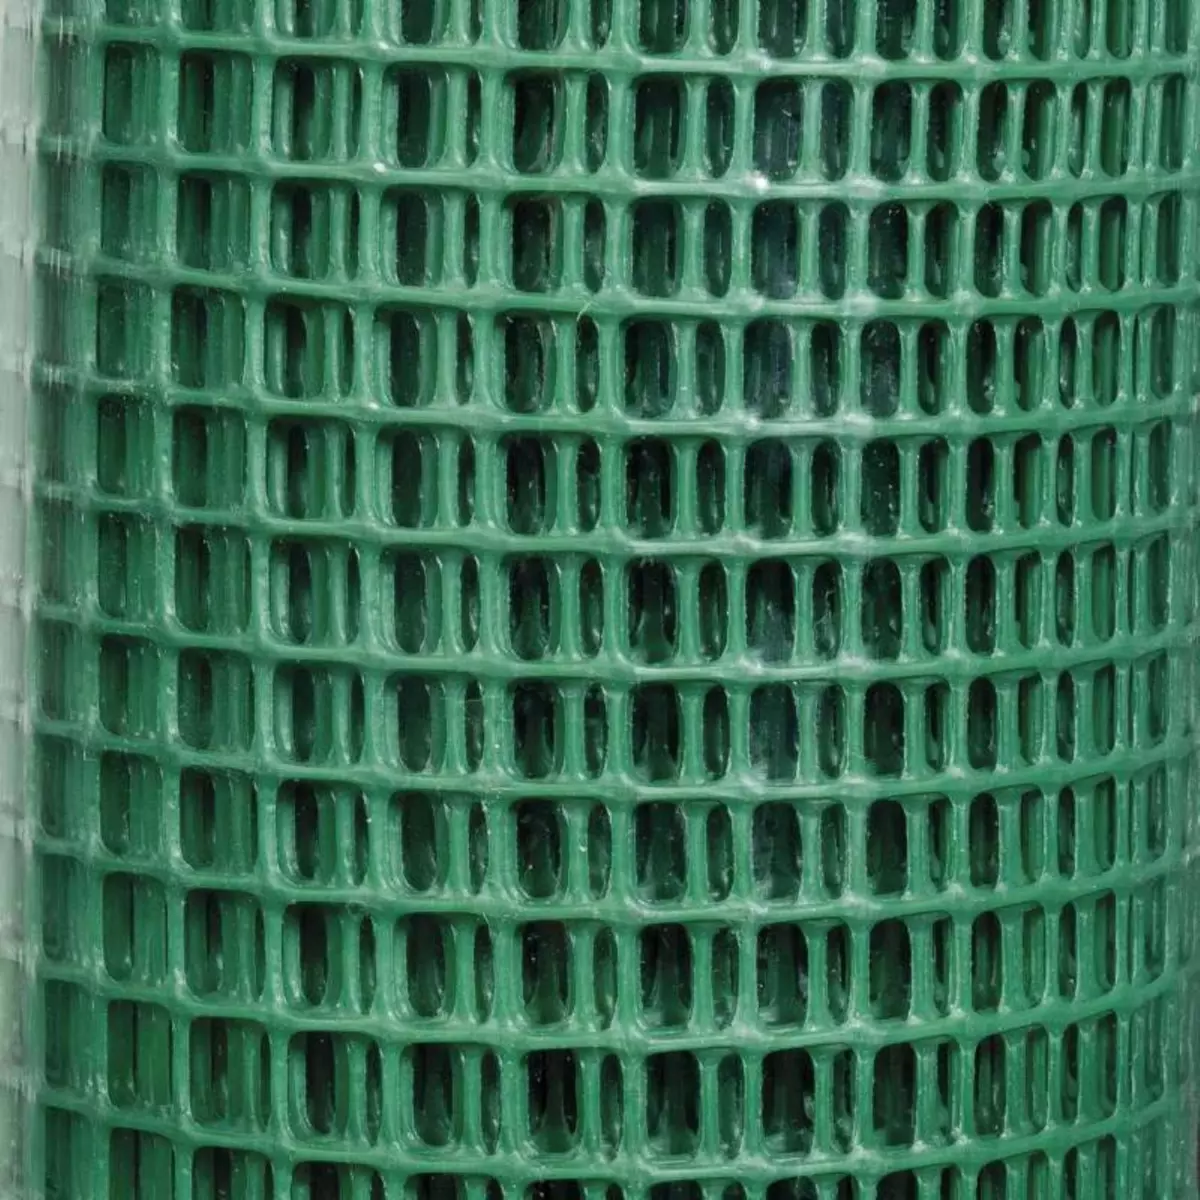 Tenax Grillage plastique vert 9x9 mm Taille 1 x 5 m